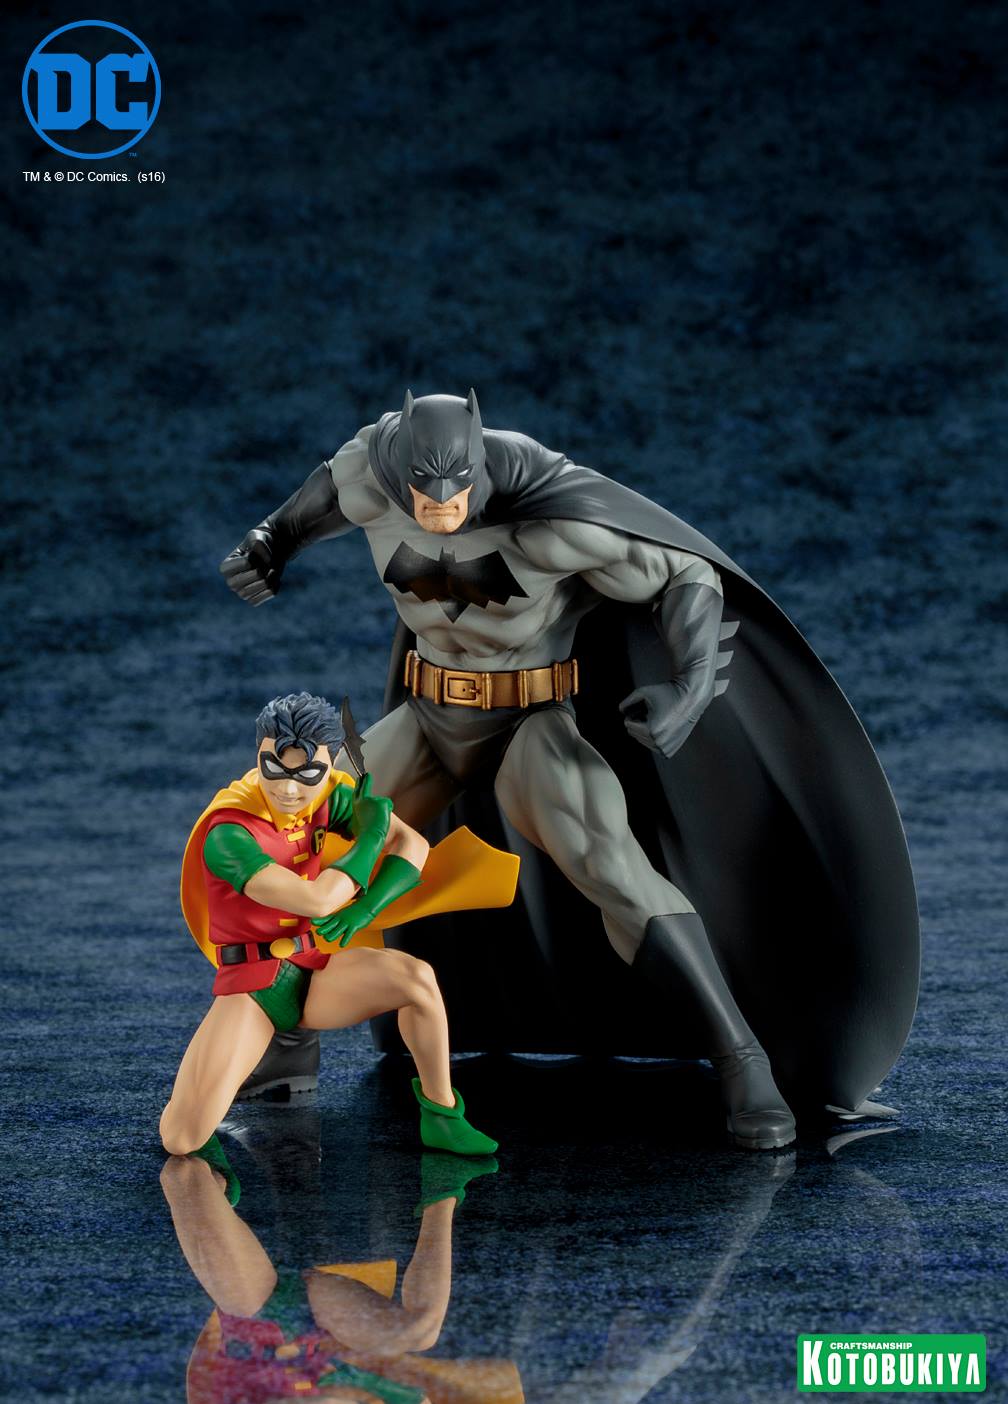 Kotobukiya DC Comics Batman & Robin Jim Lee ARTFX+ Statue 2-Pack